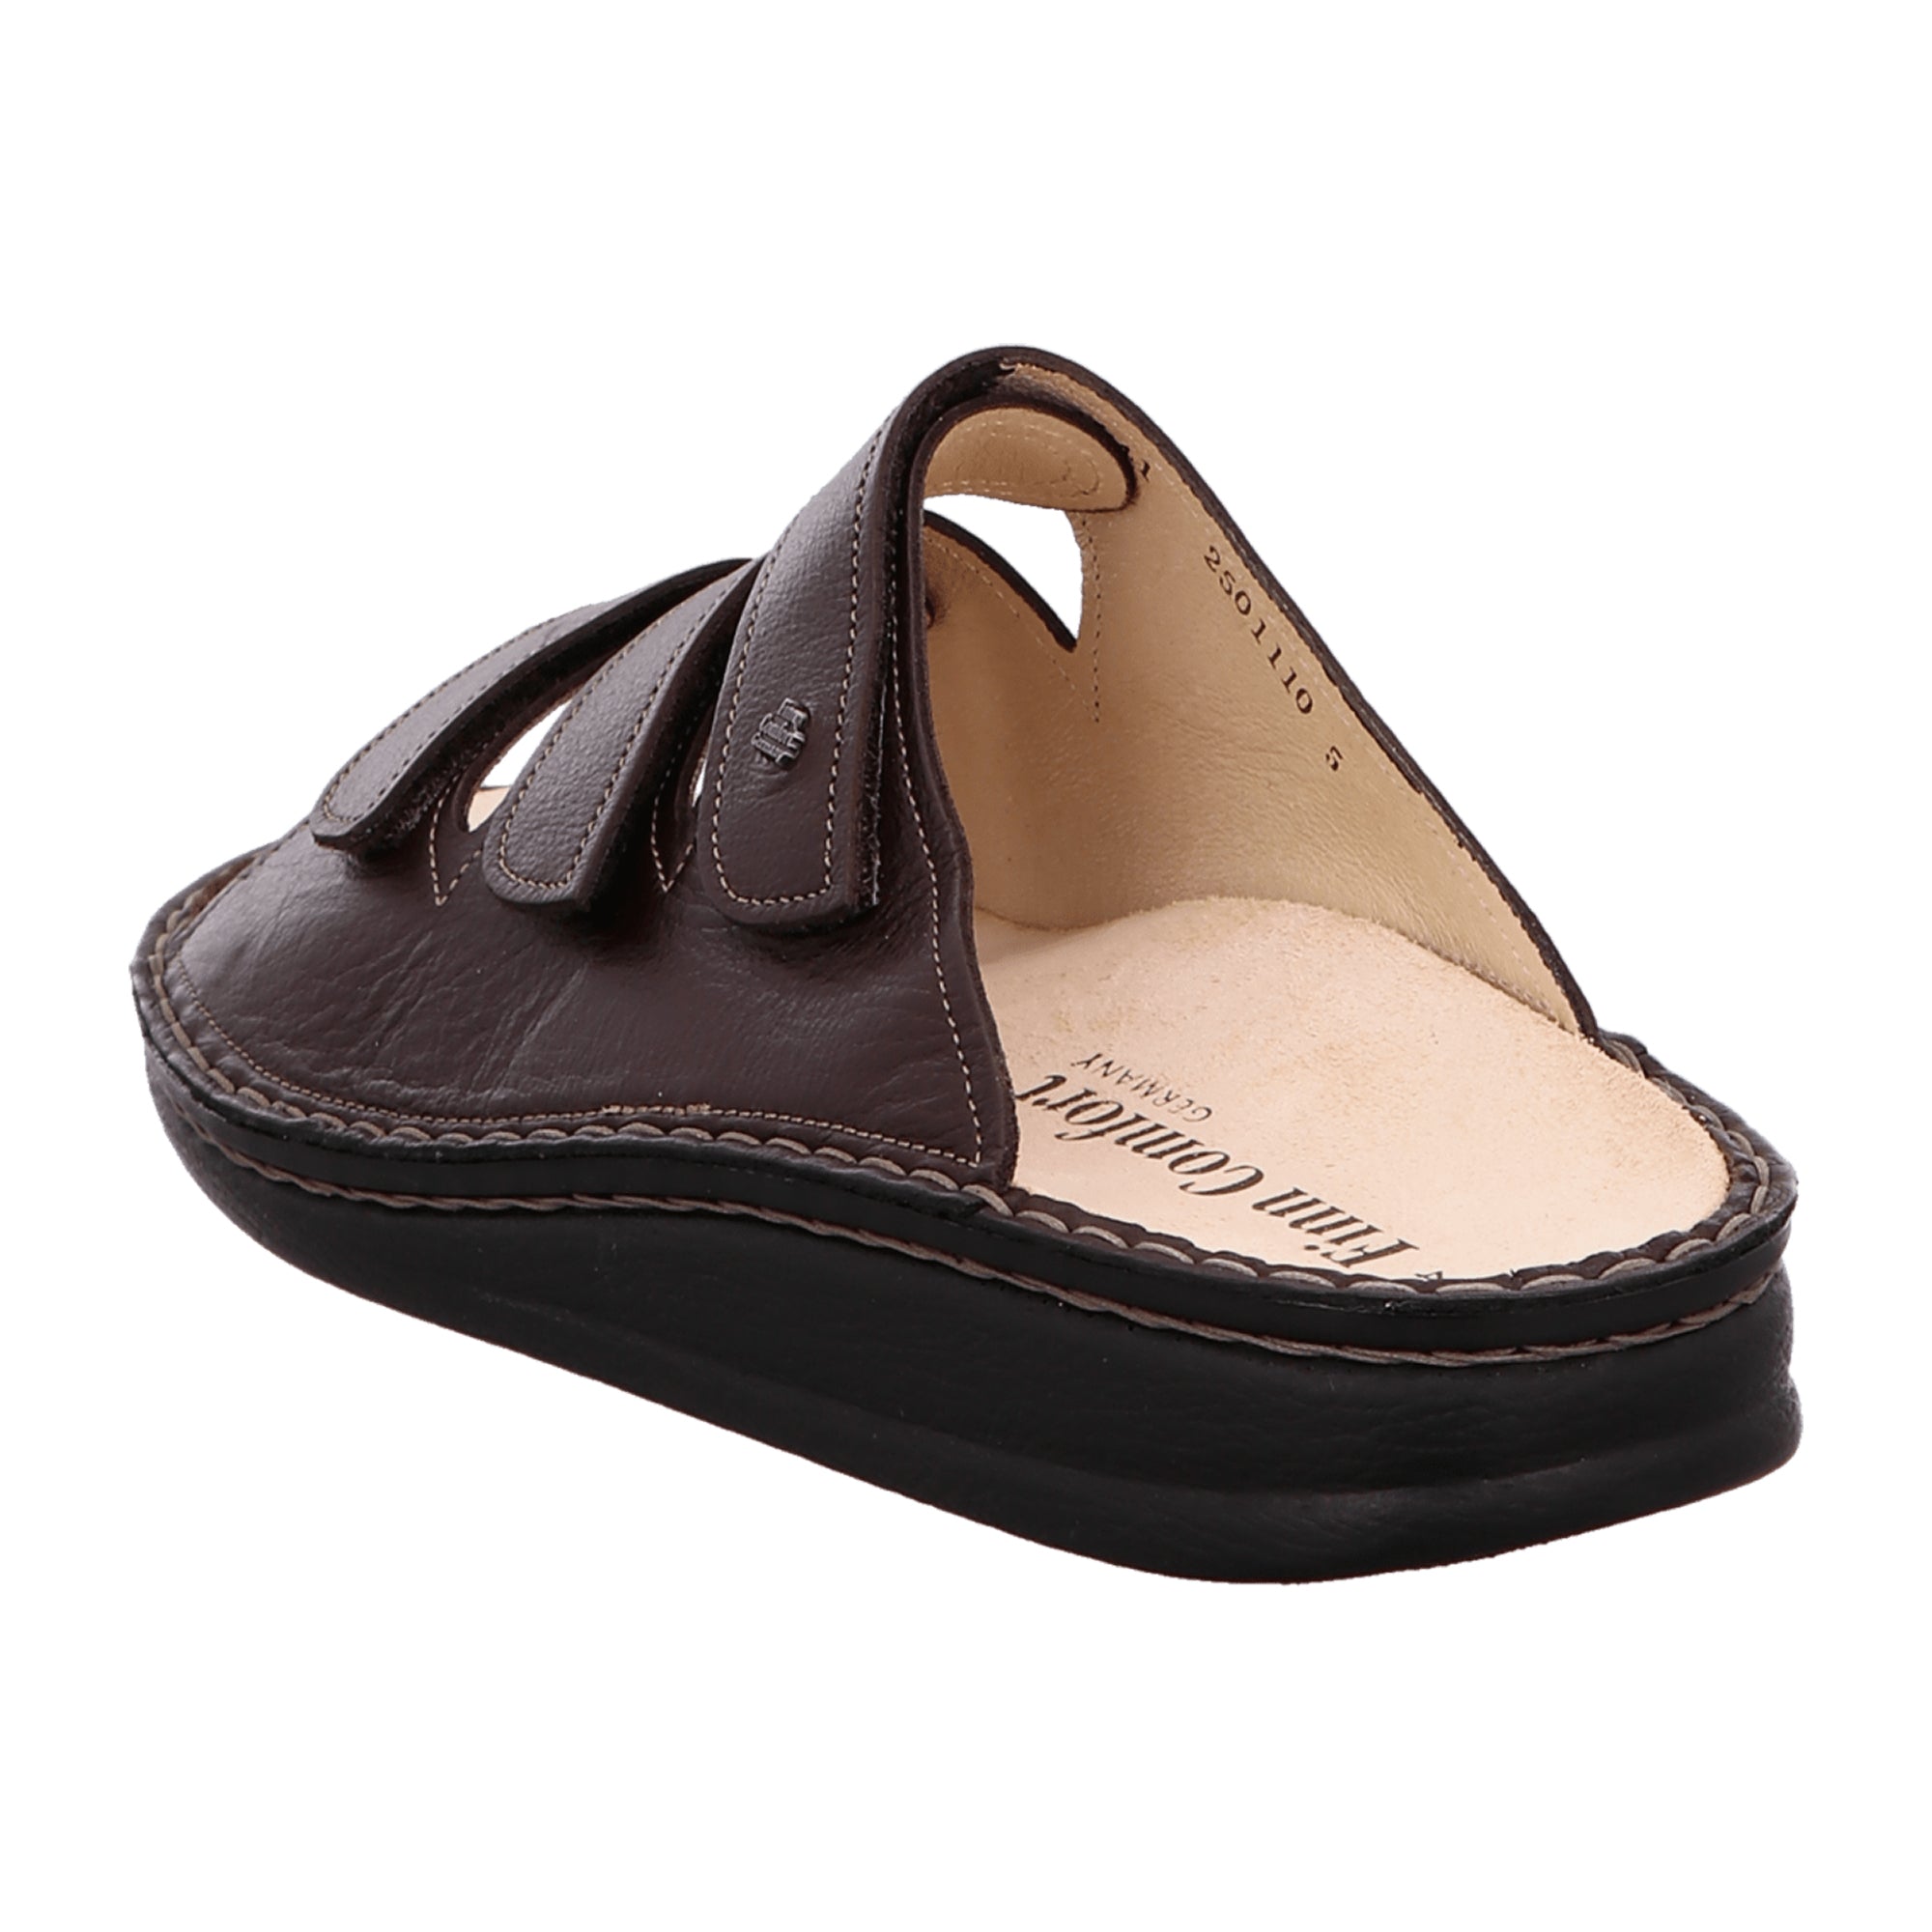 Finn Comfort Korfu Men's Brown Sandals - Durable & Stylish Comfort Footwear